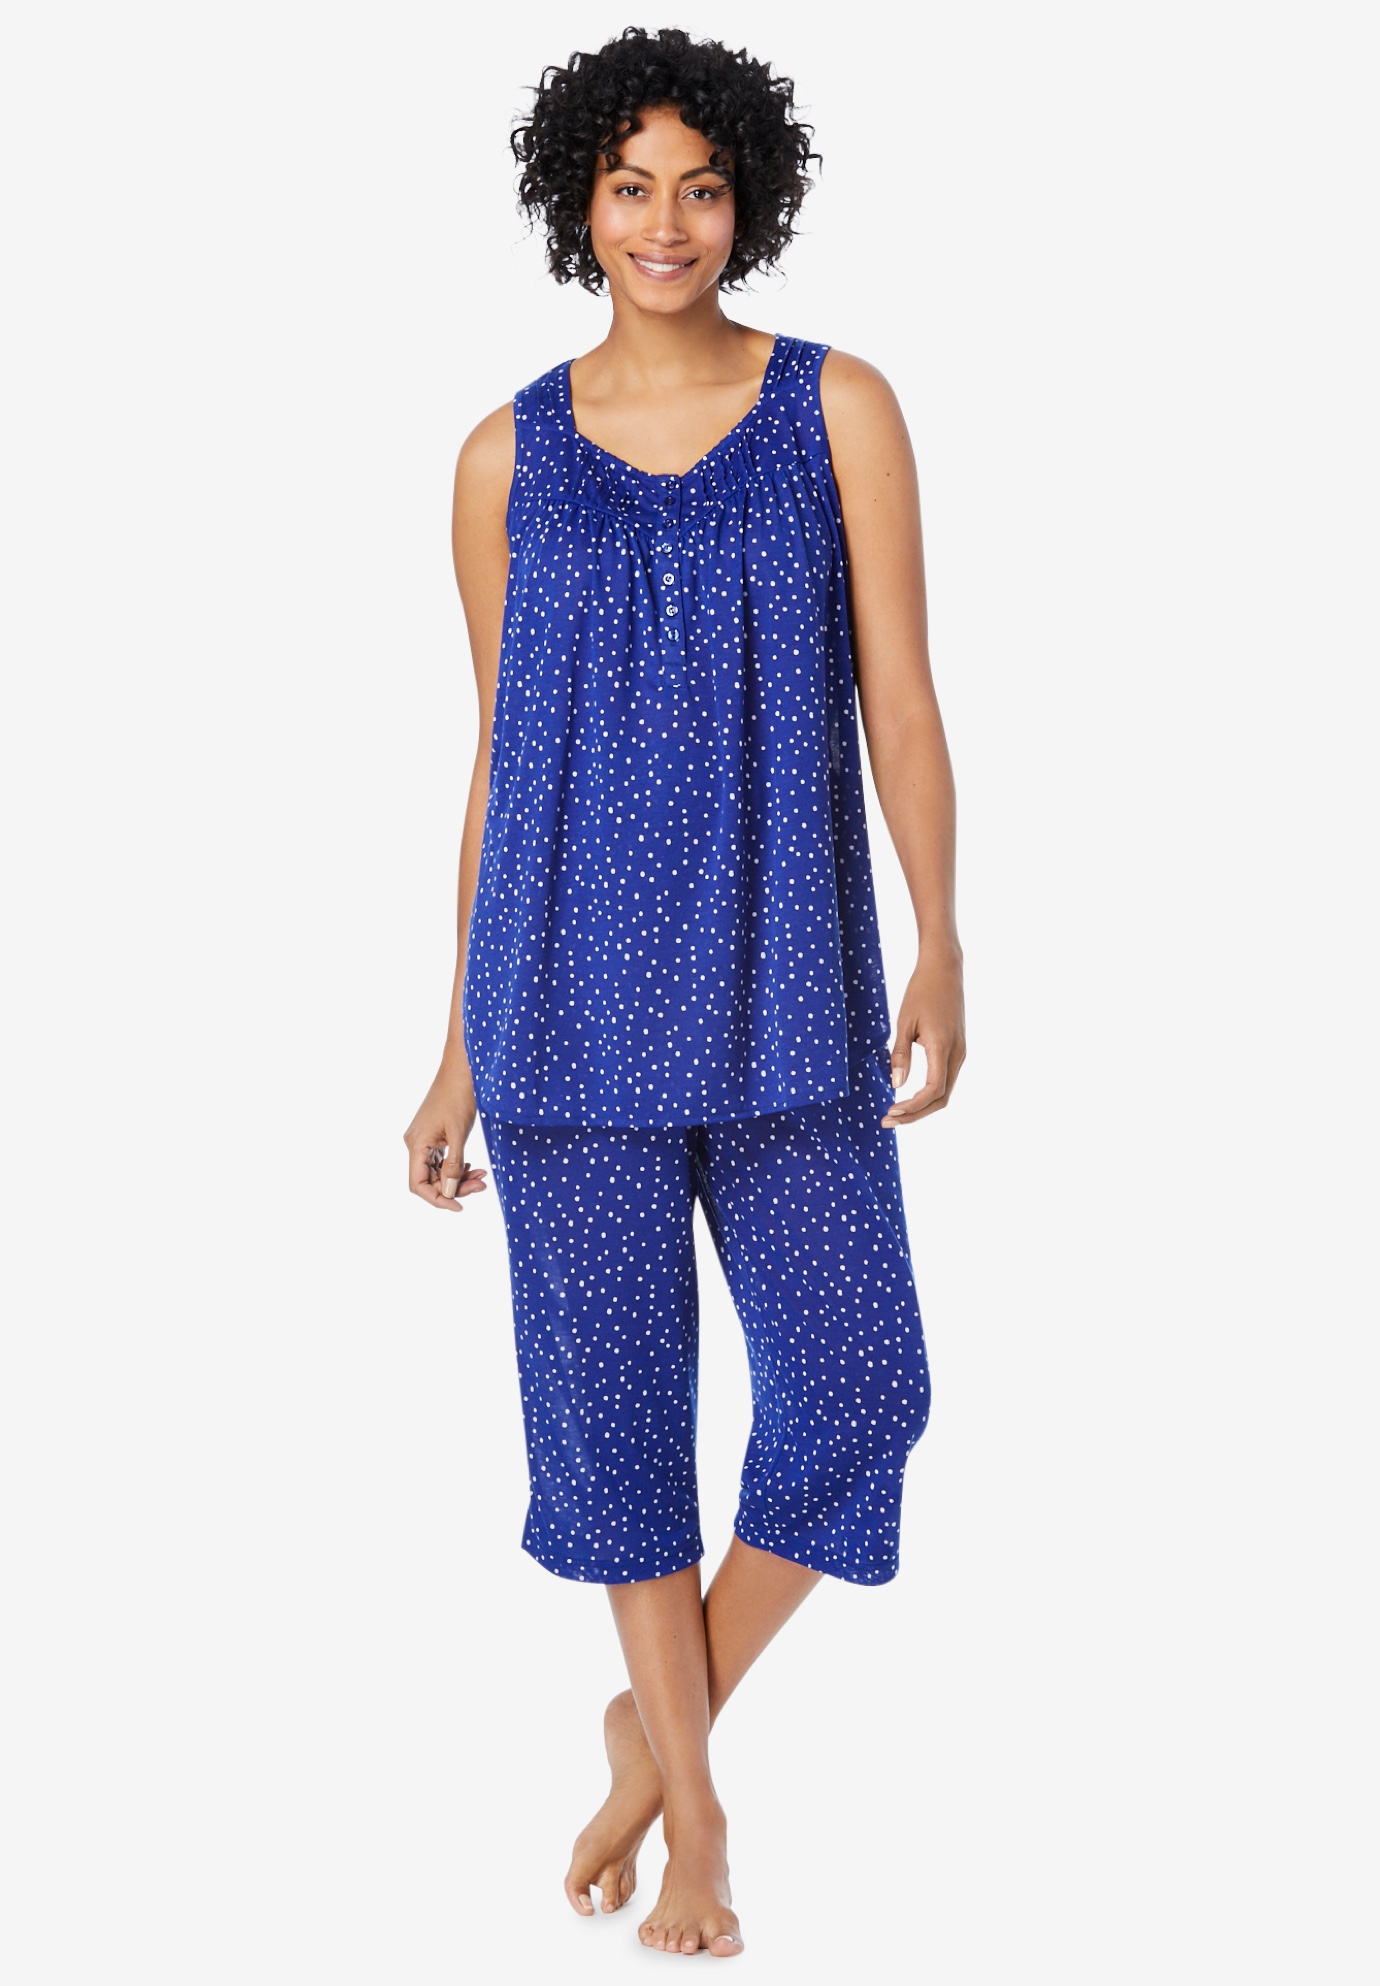 Cooling Pajamas| Plus Size Pajama Sets | Woman Within